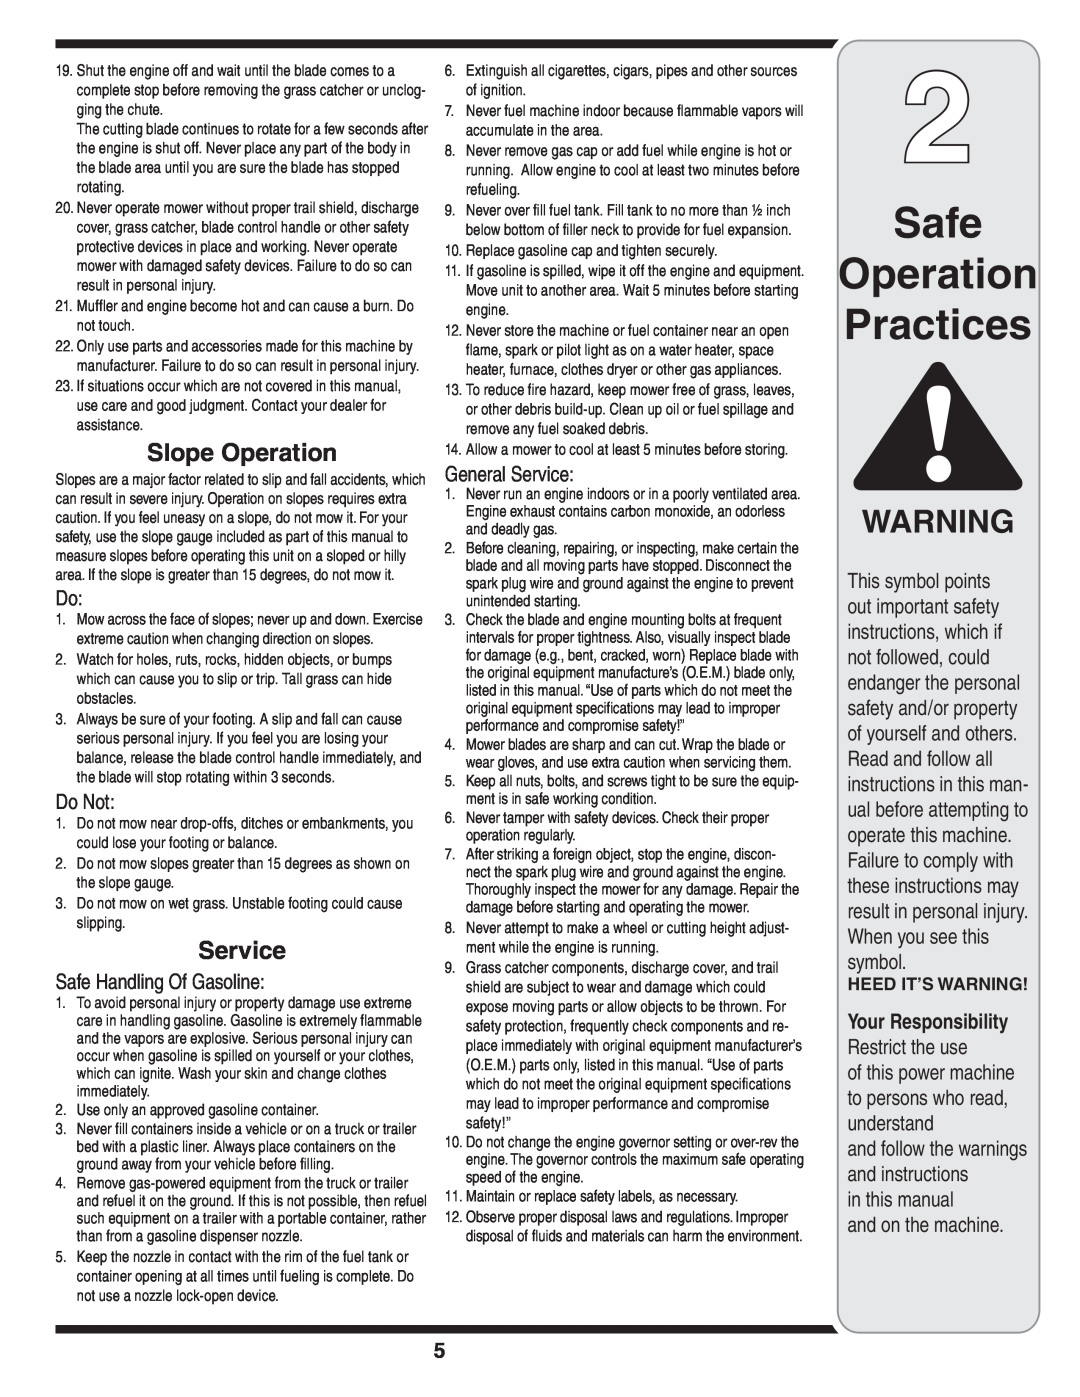 Troy-Bilt 440 warranty Safe Operation Practices, Slope Operation, Service, Heed It’S Warning 